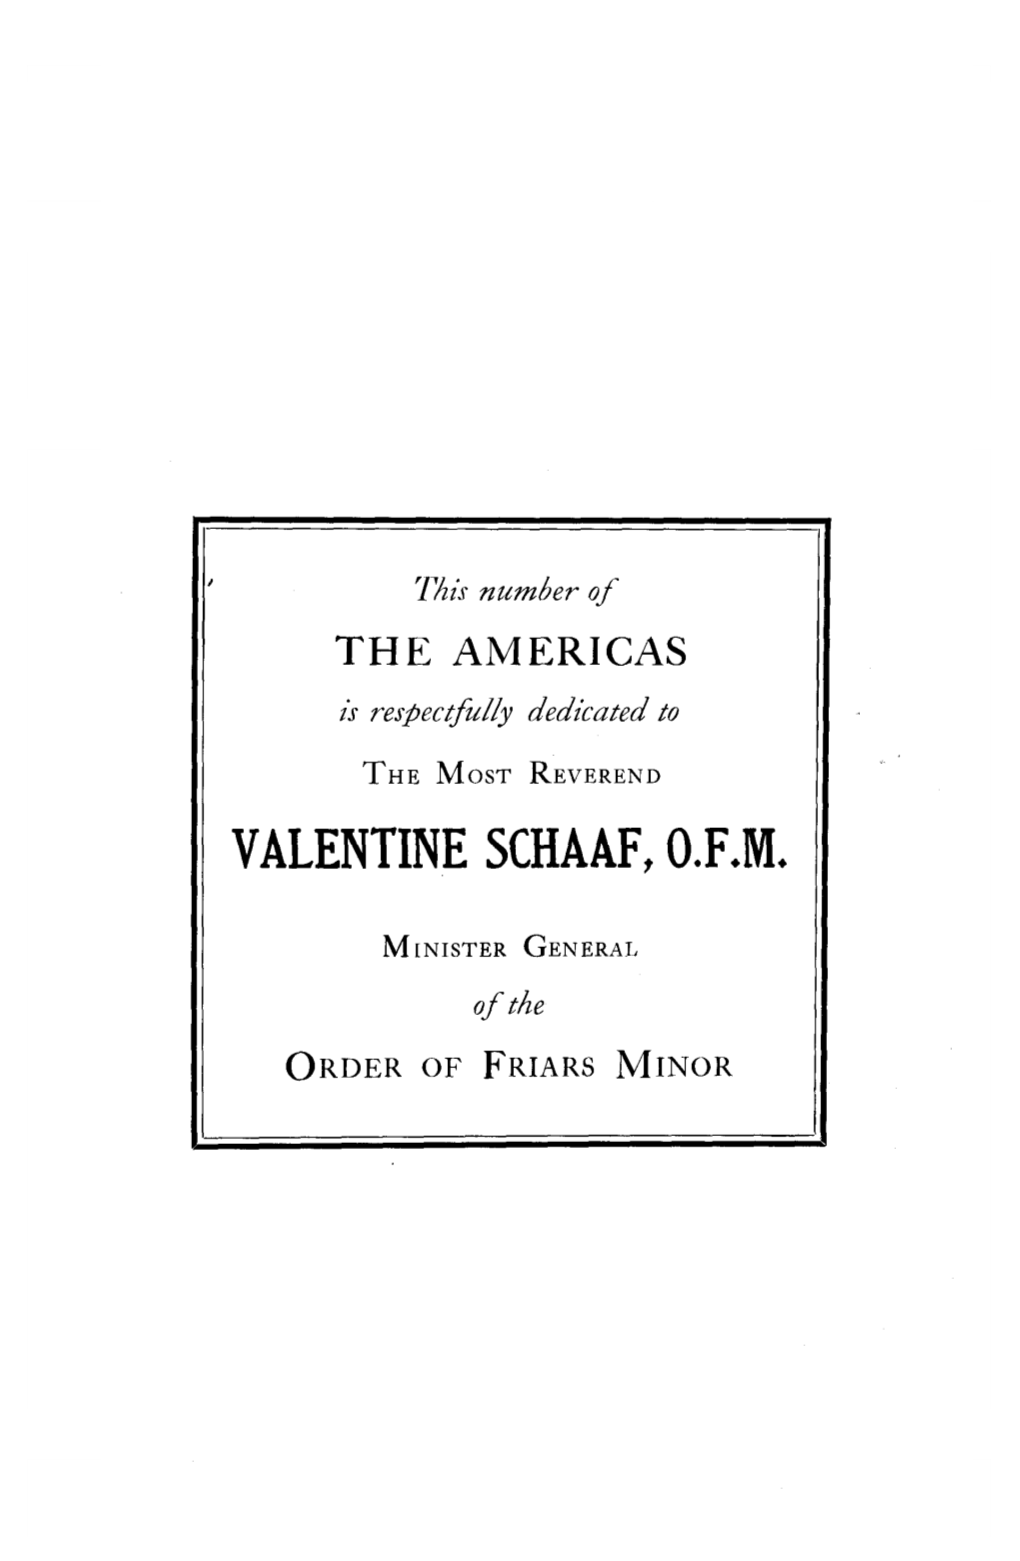 Valentine Schaaf, O.F.M